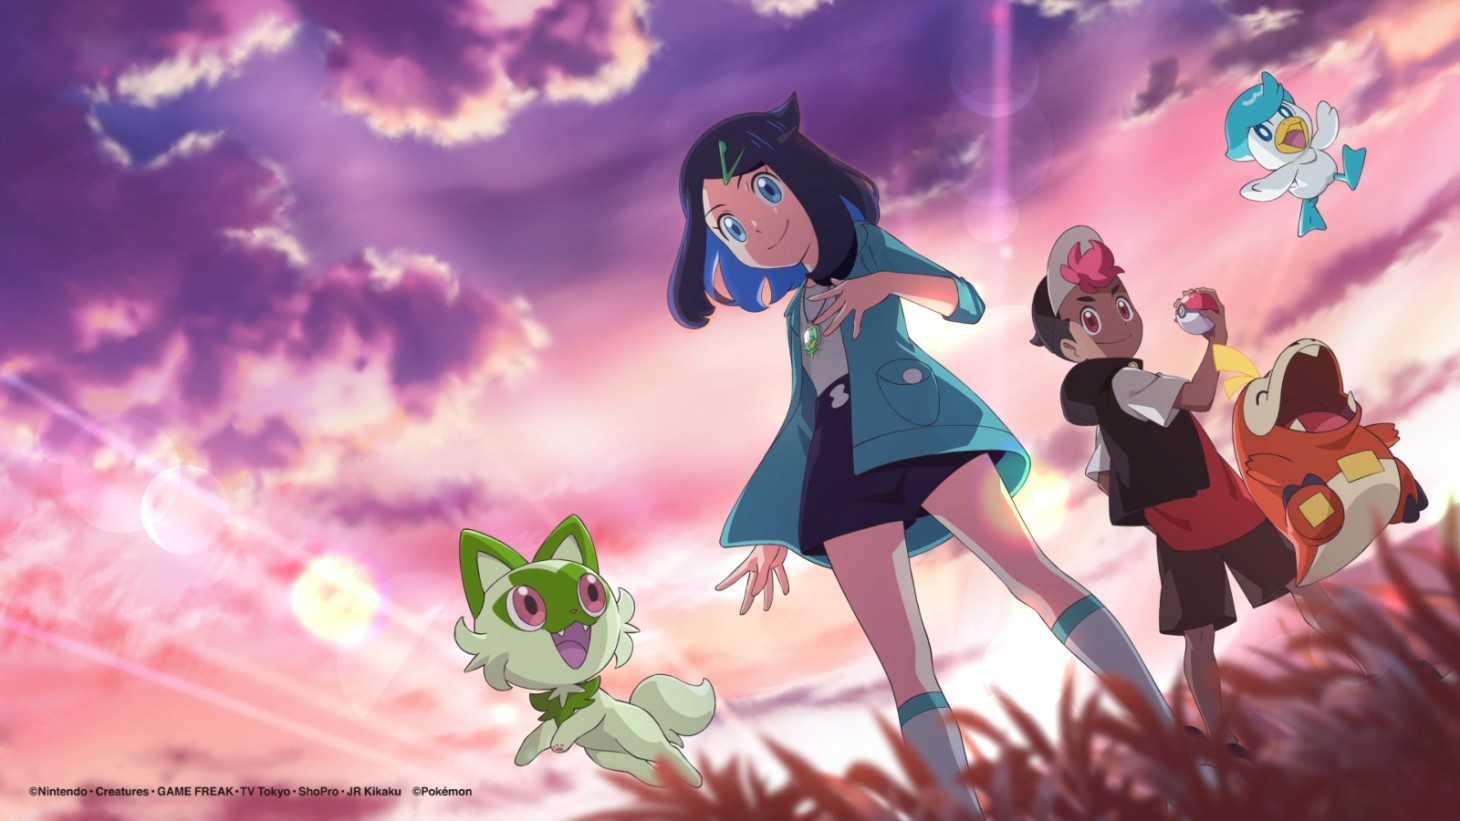 Pokémon Anime Previews Final Ash Episodes, New Series in English